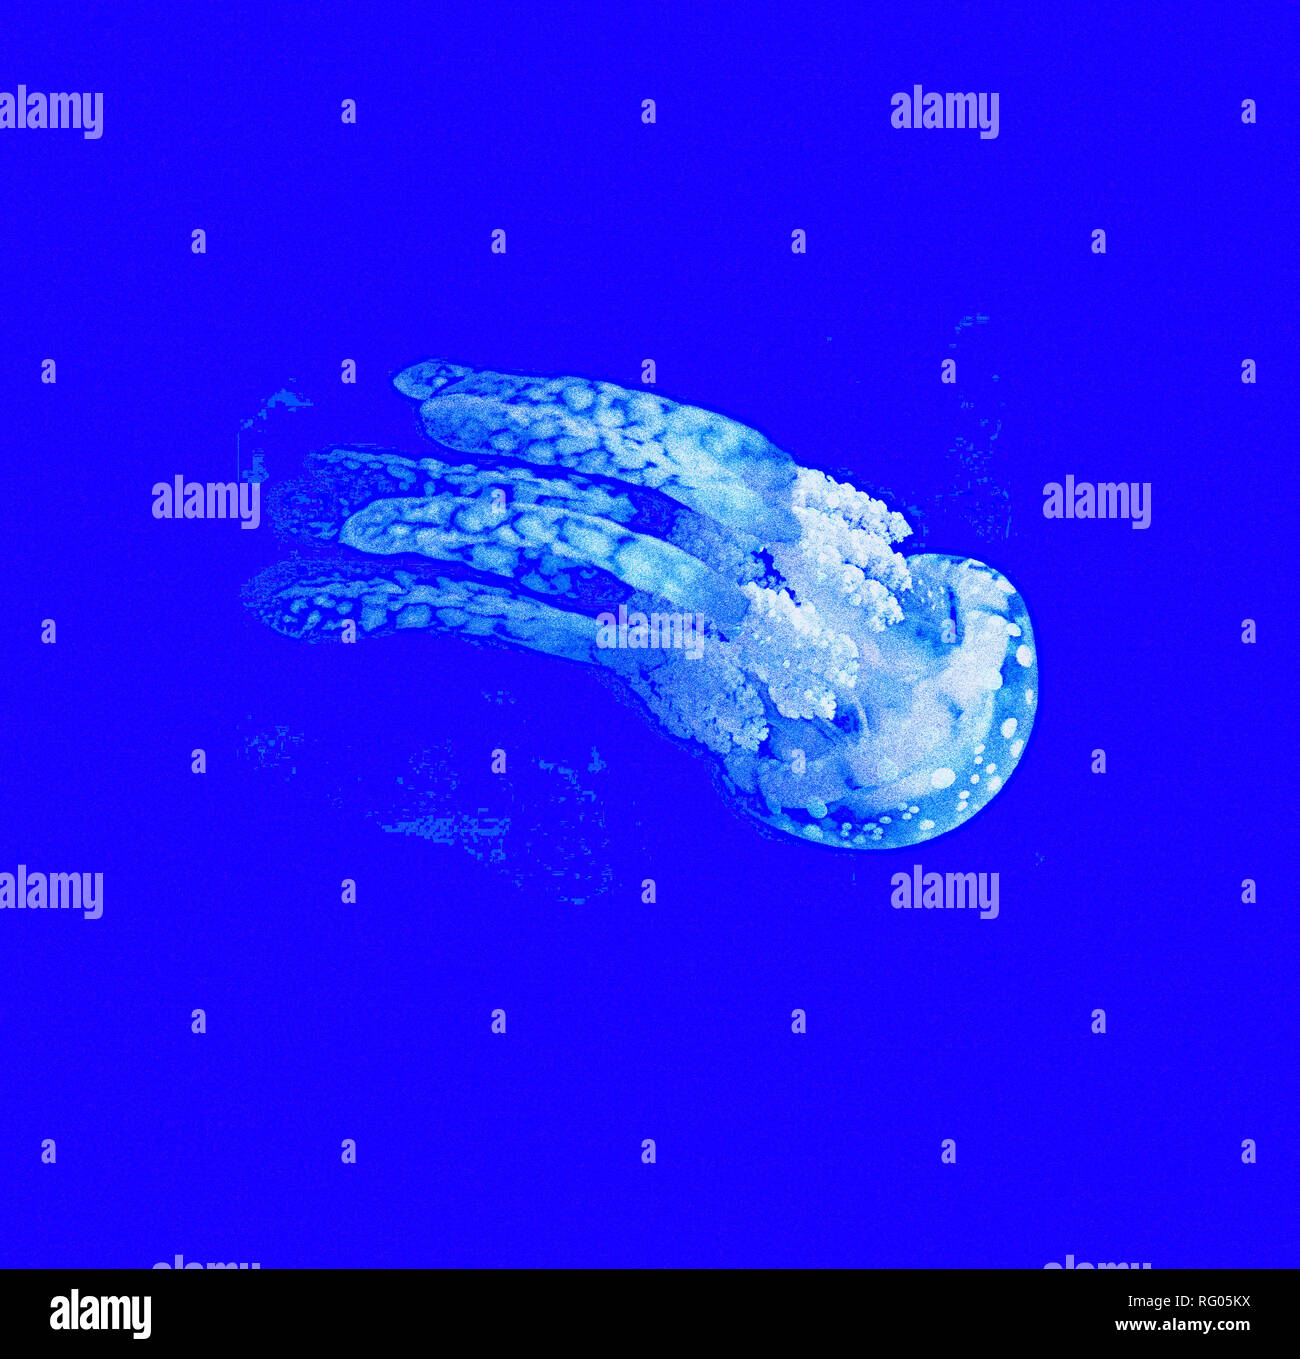 Le Glowng Jelly Fish par Adam Asar.jpg - RG05KX Banque D'Images